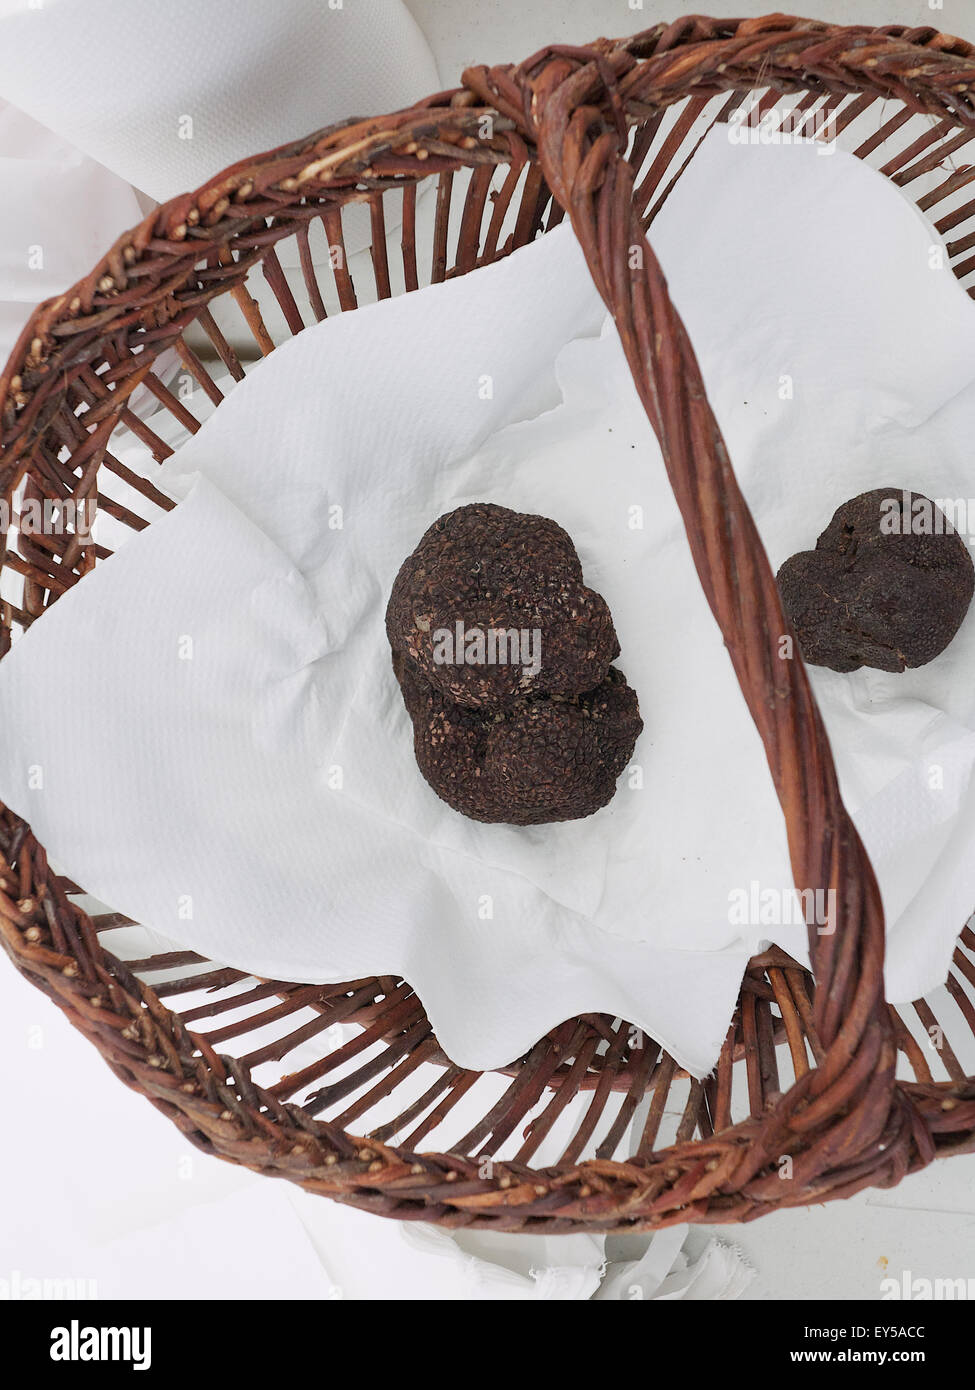 Black truffle or Perigord truffle in a basket - France Stock Photo